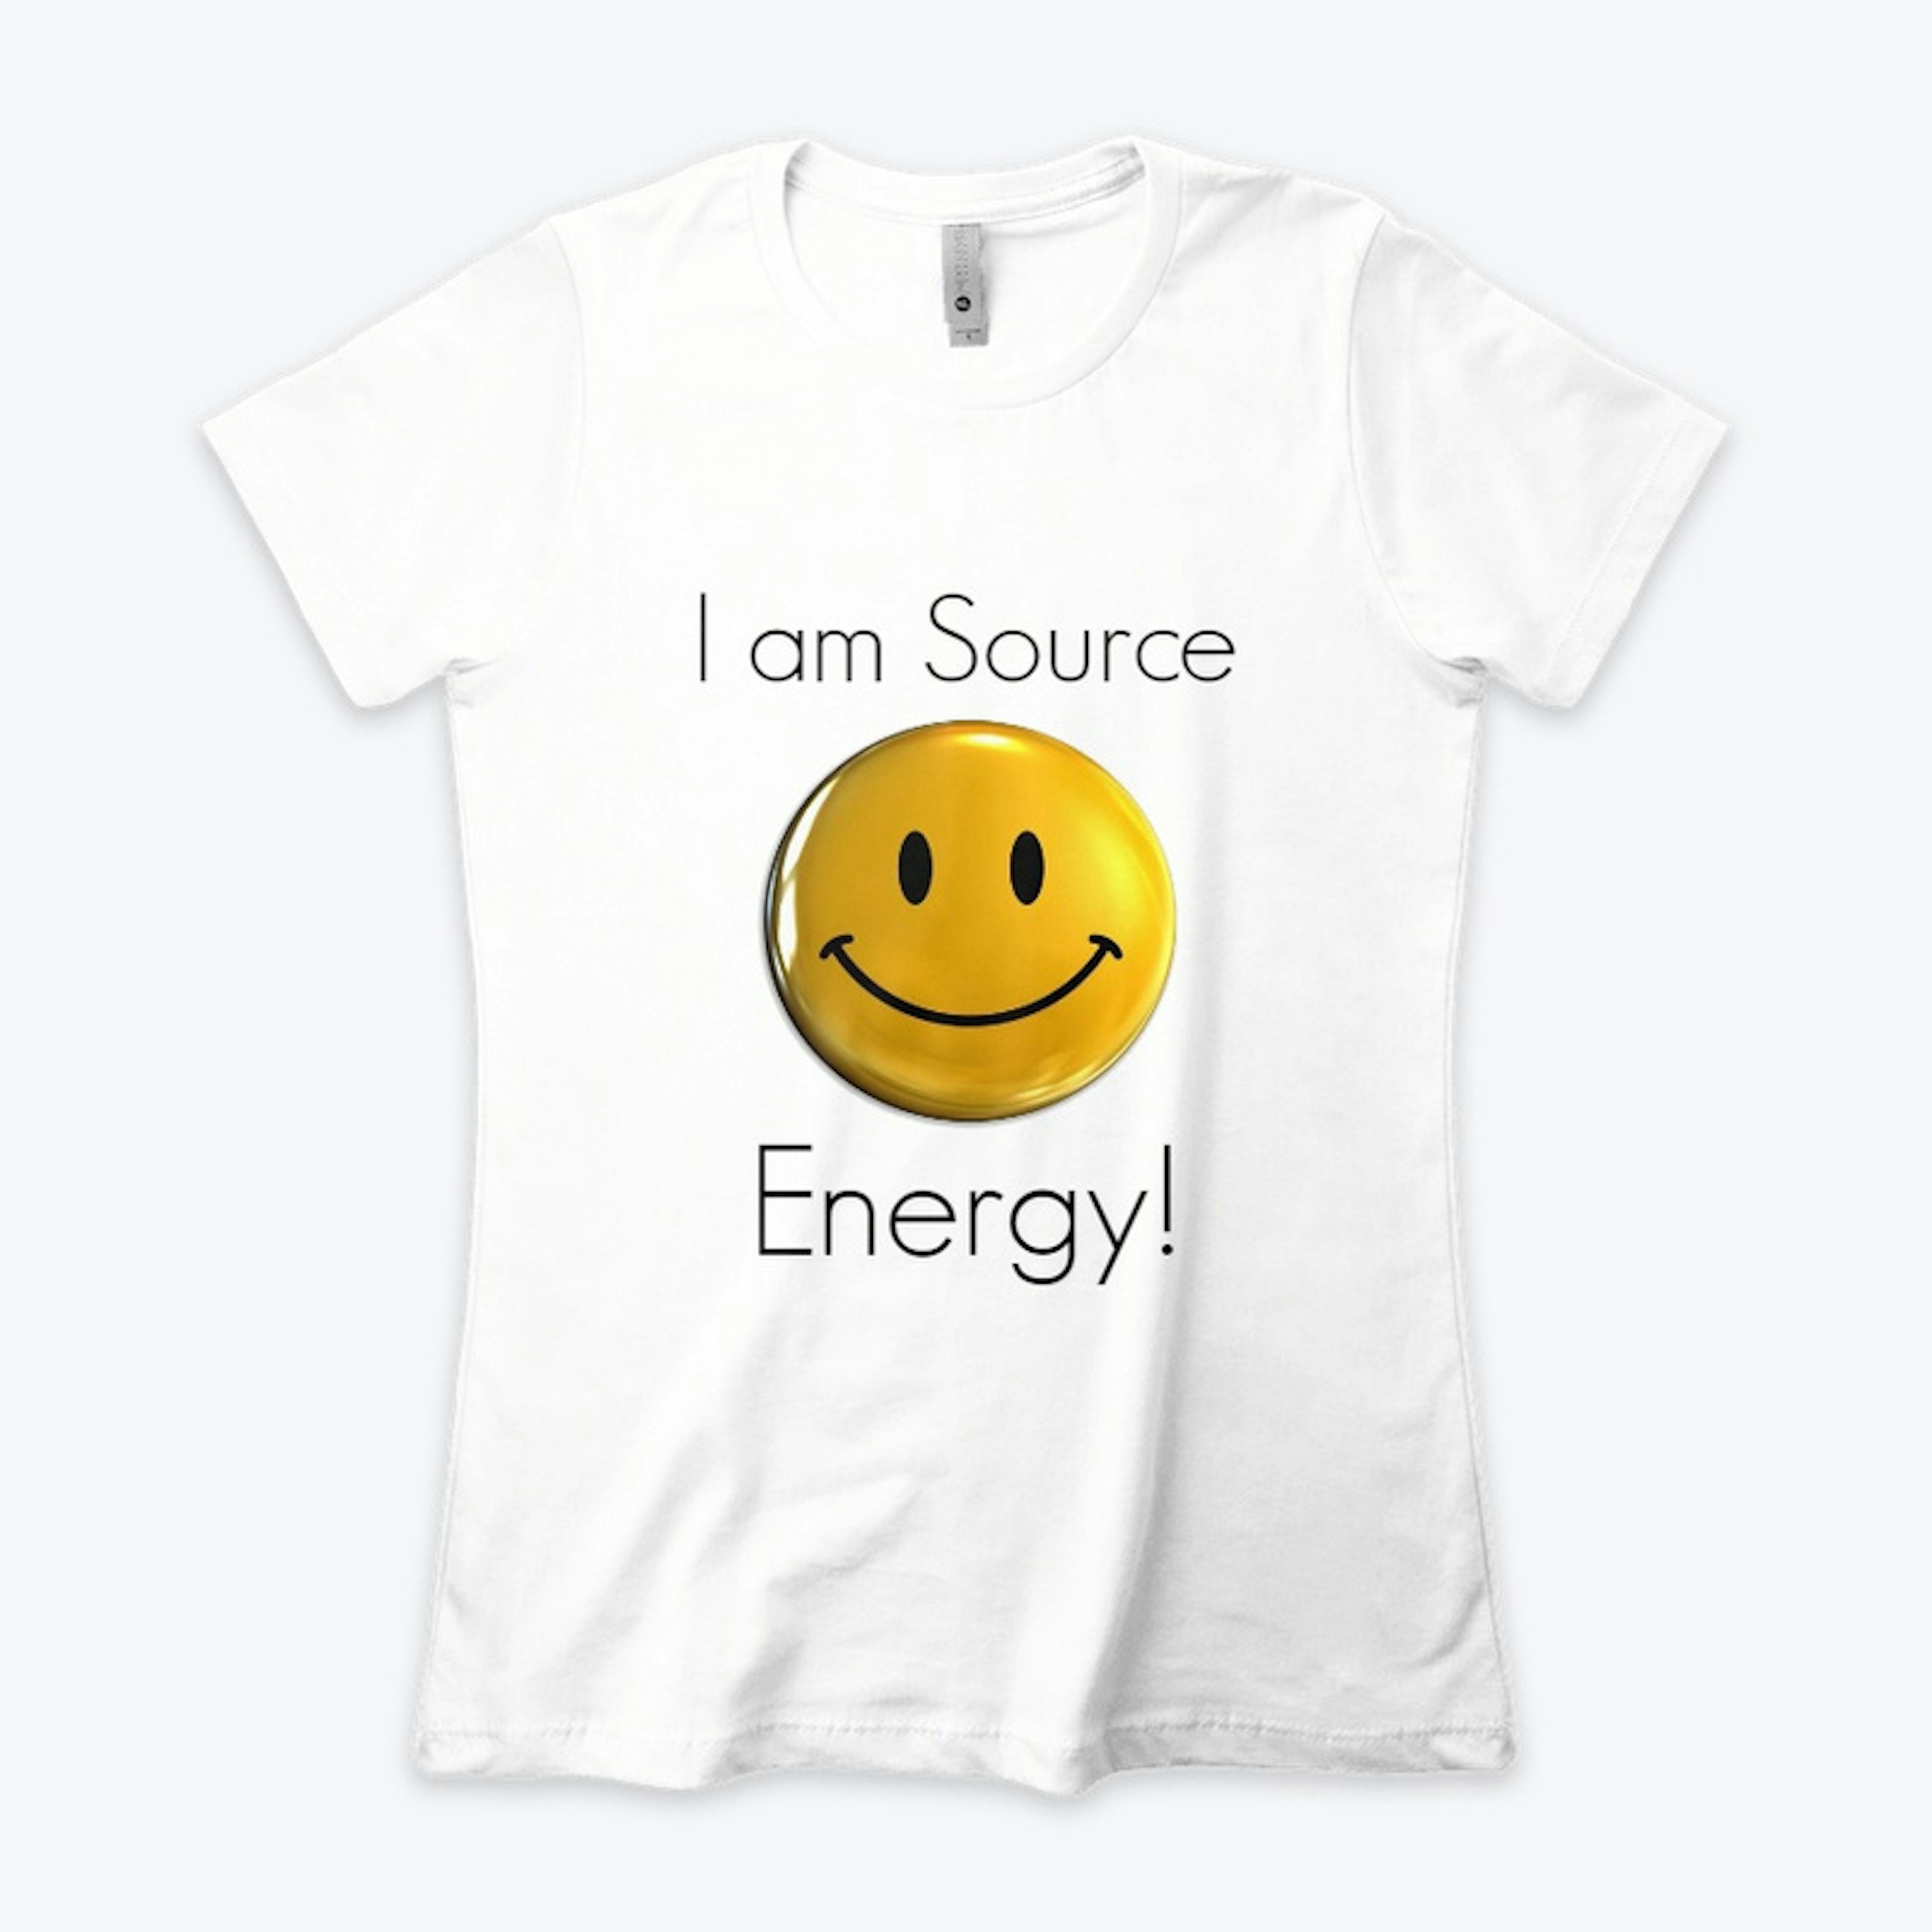 I am Source energy